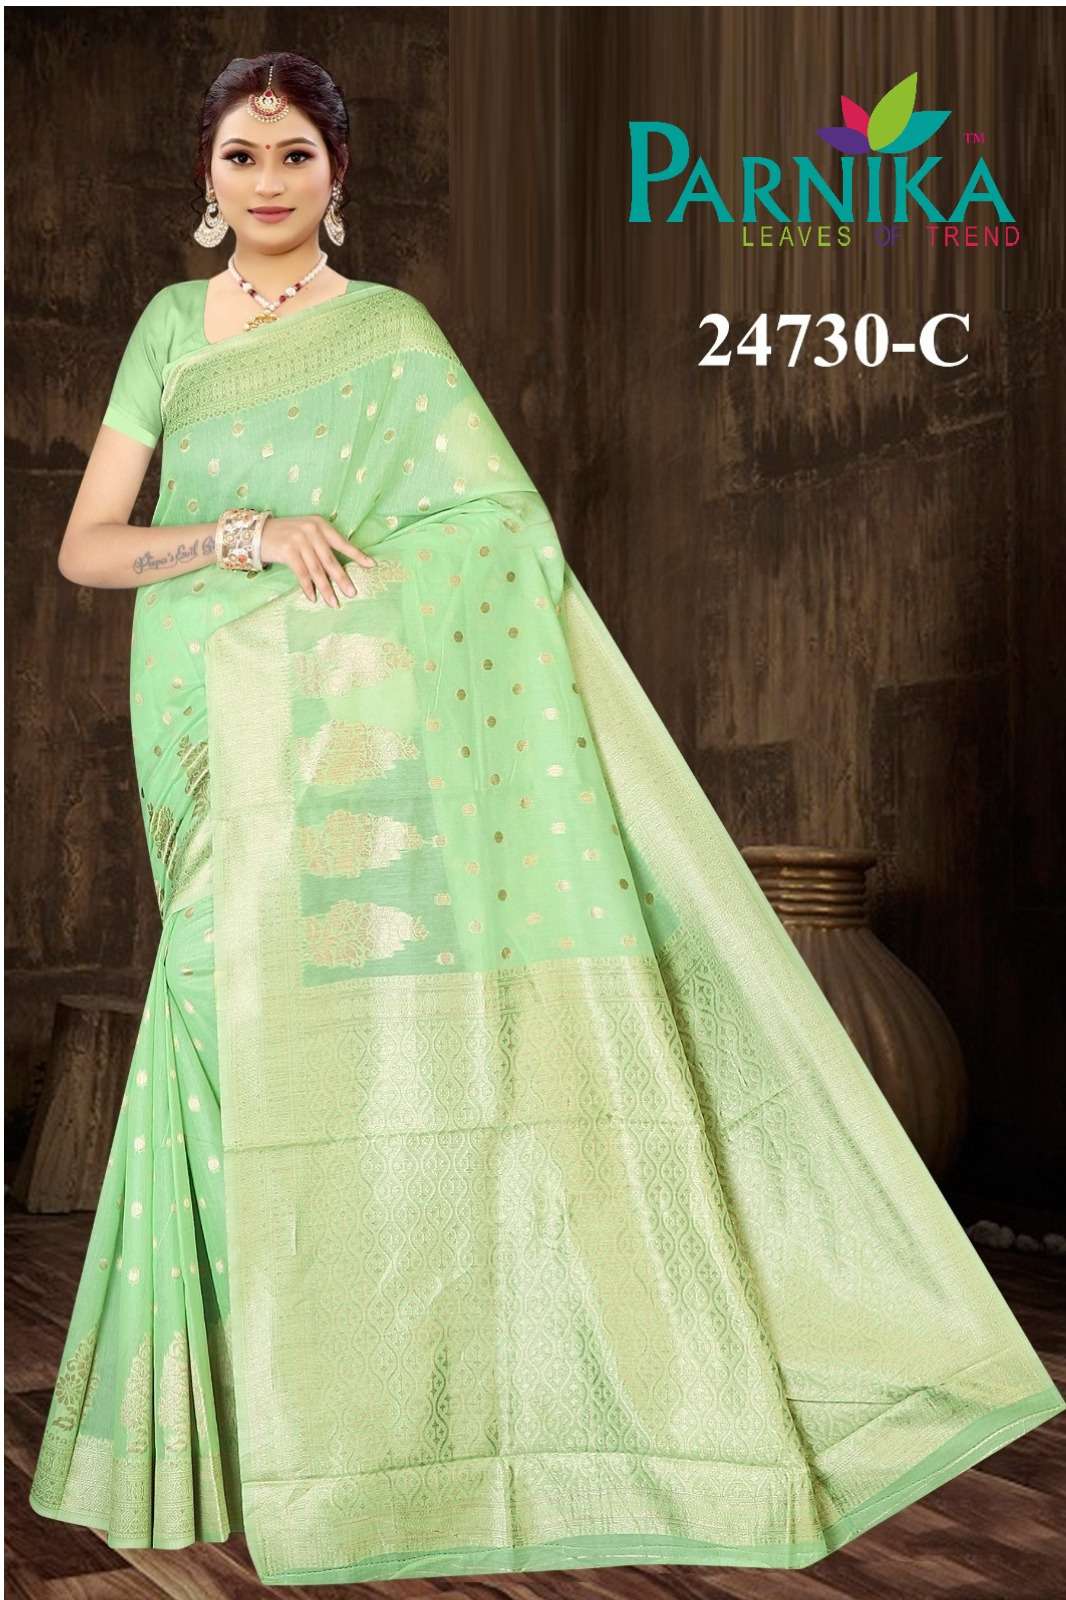 Parnika India Cotton Spun Sarees Festive Wear Wedding Saree in Wholesale rate - 24730  